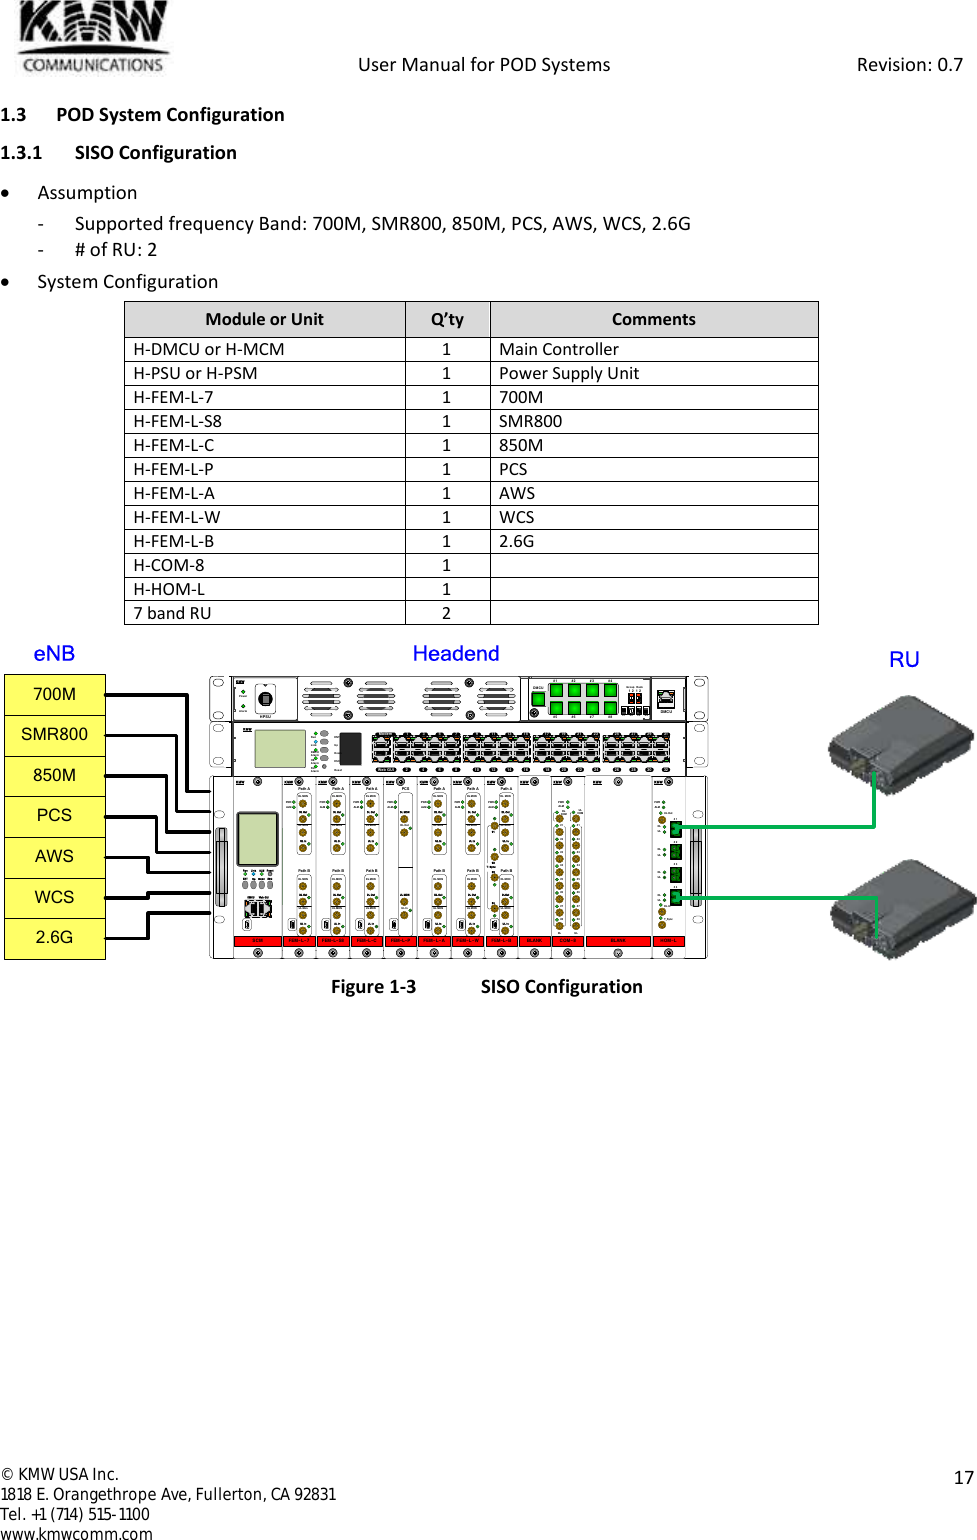            User Manual for POD Systems                                                     Revision: 0.7  ©  KMW USA Inc. 1818 E. Orangethrope Ave, Fullerton, CA 92831 Tel. +1 (714) 515-1100 www.kmwcomm.com  17  1.3 POD System Configuration 1.3.1 SISO Configuration  Assumption - Supported frequency Band: 700M, SMR800, 850M, PCS, AWS, WCS, 2.6G - # of RU: 2  System Configuration Module or Unit Q’ty Comments H-DMCU or H-MCM 1 Main Controller H-PSU or H-PSM 1 Power Supply Unit H-FEM-L-7 1 700M H-FEM-L-S8 1 SMR800 H-FEM-L-C 1 850M H-FEM-L-P 1 PCS H-FEM-L-A 1 AWS H-FEM-L-W 1 WCS H-FEM-L-B 1 2.6G H-COM-8 1  H-HOM-L 1  7 band RU 2   Figure 1-3  SISO Configuration   FEM-L-WUL MONDL MONDL OutUL InUL MONDL MONDL OutUL InPWRALMPath APath BKMWFEM-L-AUL MONDL MONDL OutUL InUL MONDL MONDL OutUL InPWRALMPath APath BKMWFEM-L-7UL MONDL MONDL OutUL InUL MonDL MONDL OutUL InPWRALMPath APath BKMWFEM-L-S8UL MONDL MONDL OutUL InUL MONDL MONDL OutUL InPWRALMPath APath BKMWFEM-L-CUL MONDL MONDL OutUL InUL MONDL MONDL OutUL InPWRALMPath APath BKMWFEM-L-BUL MONDL  MONDLOutUL InUL MONDL MONDL OutUL InPWRALMPath APath B#1#2#3#4T-SyncKMWFEM-L-PDL OutUL MONUL InDL MONPWRALMPCSKMWRun Link ALM ResetENT Up Down ESCDMCU Web GUISCMKMWCOM-8PWRALMDLCOM#1#2#3#4#5#6#7#8#1#2#3#4#5#6#7#8ULCOMDL ULKMWHOM-LPWRALMUL OutDL InT_SyncDLULDLULDLULDLULKMW# 1# 2# 3# 4ENTUpDownESCResetRunDMCUAlarmLinkHEAlarmRUAlarm12345 76 89 11 13 1510 12 14 1617 19 21 2318 20 22 2425 27 29 3126 28 30 32ModemWeb GUIKMWDMCUHPSUPowerAlarm#1             #2             #3             #4#5             #6             #7             #8DMCU   #1     #2     #3     #41 2  1 2Group  RackKMWBLANKKMW700MeNBSMR800850MPCSAWSWCS2.6GHeadend RUBLANKKMW